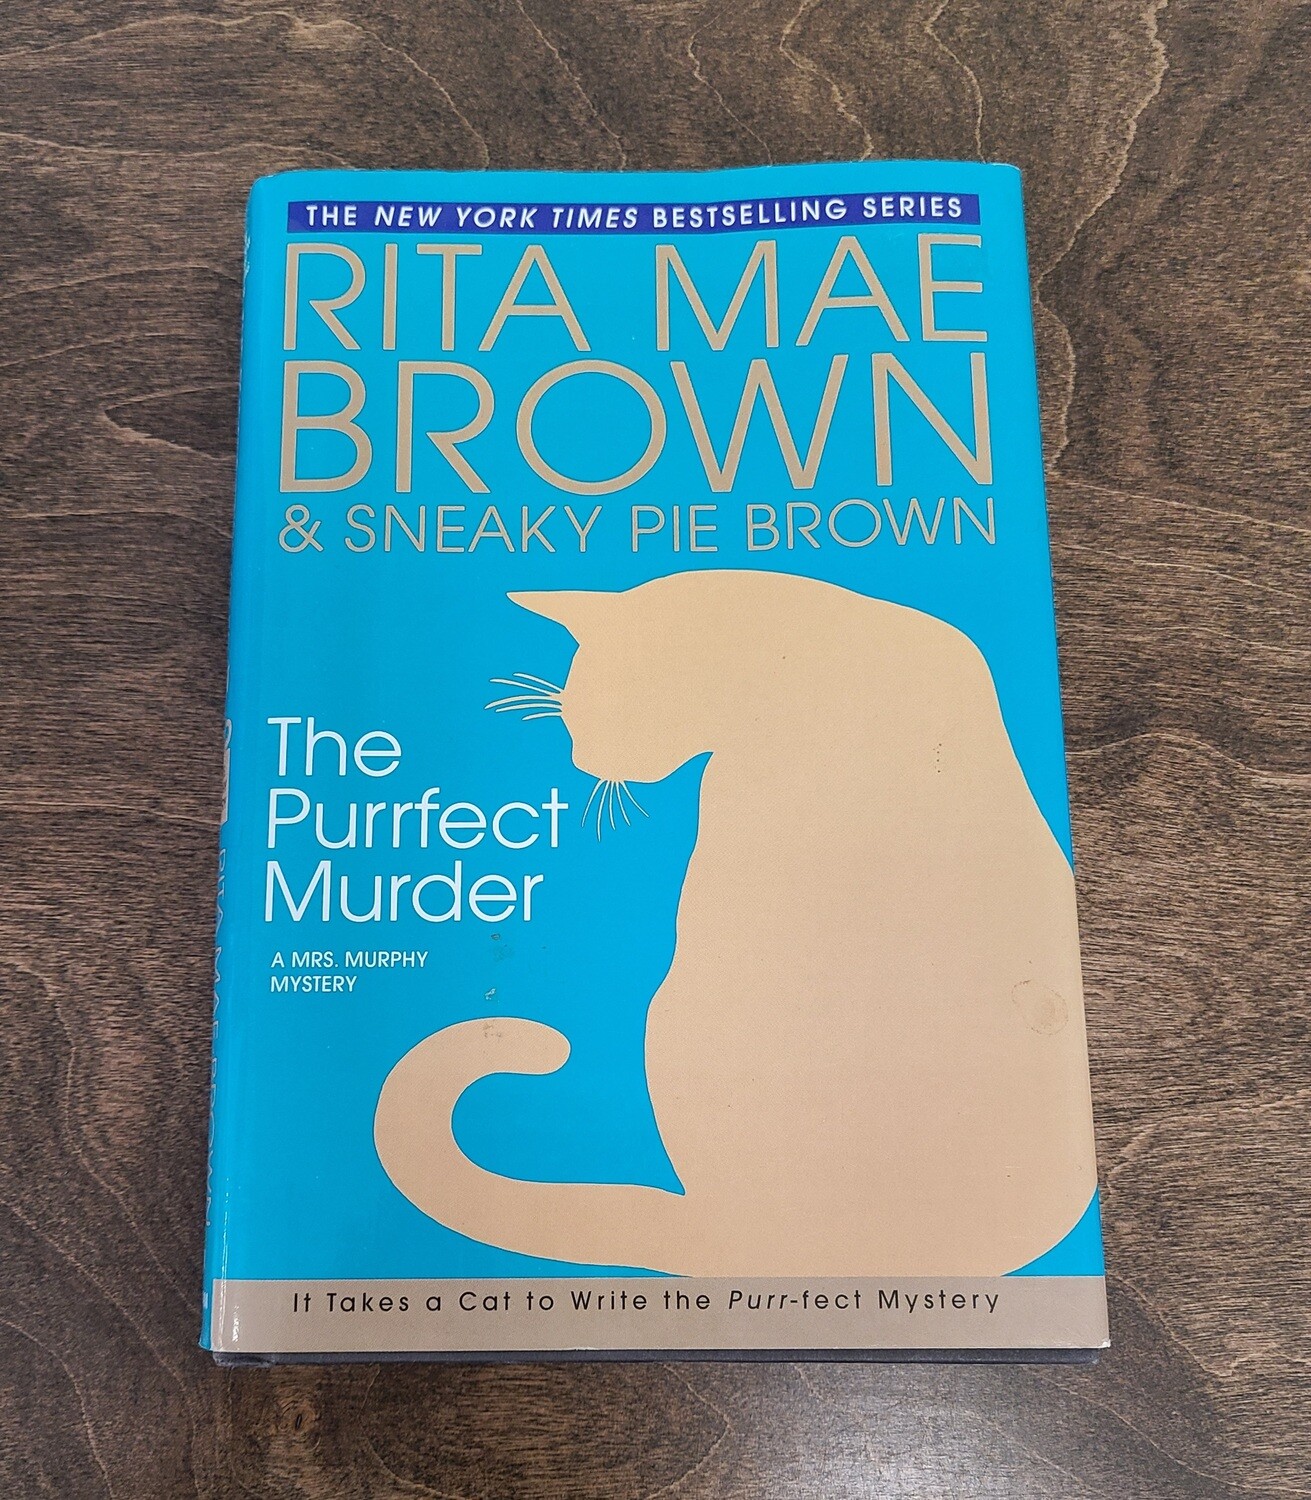 The Purrfect Murder by Rita Mae Brown